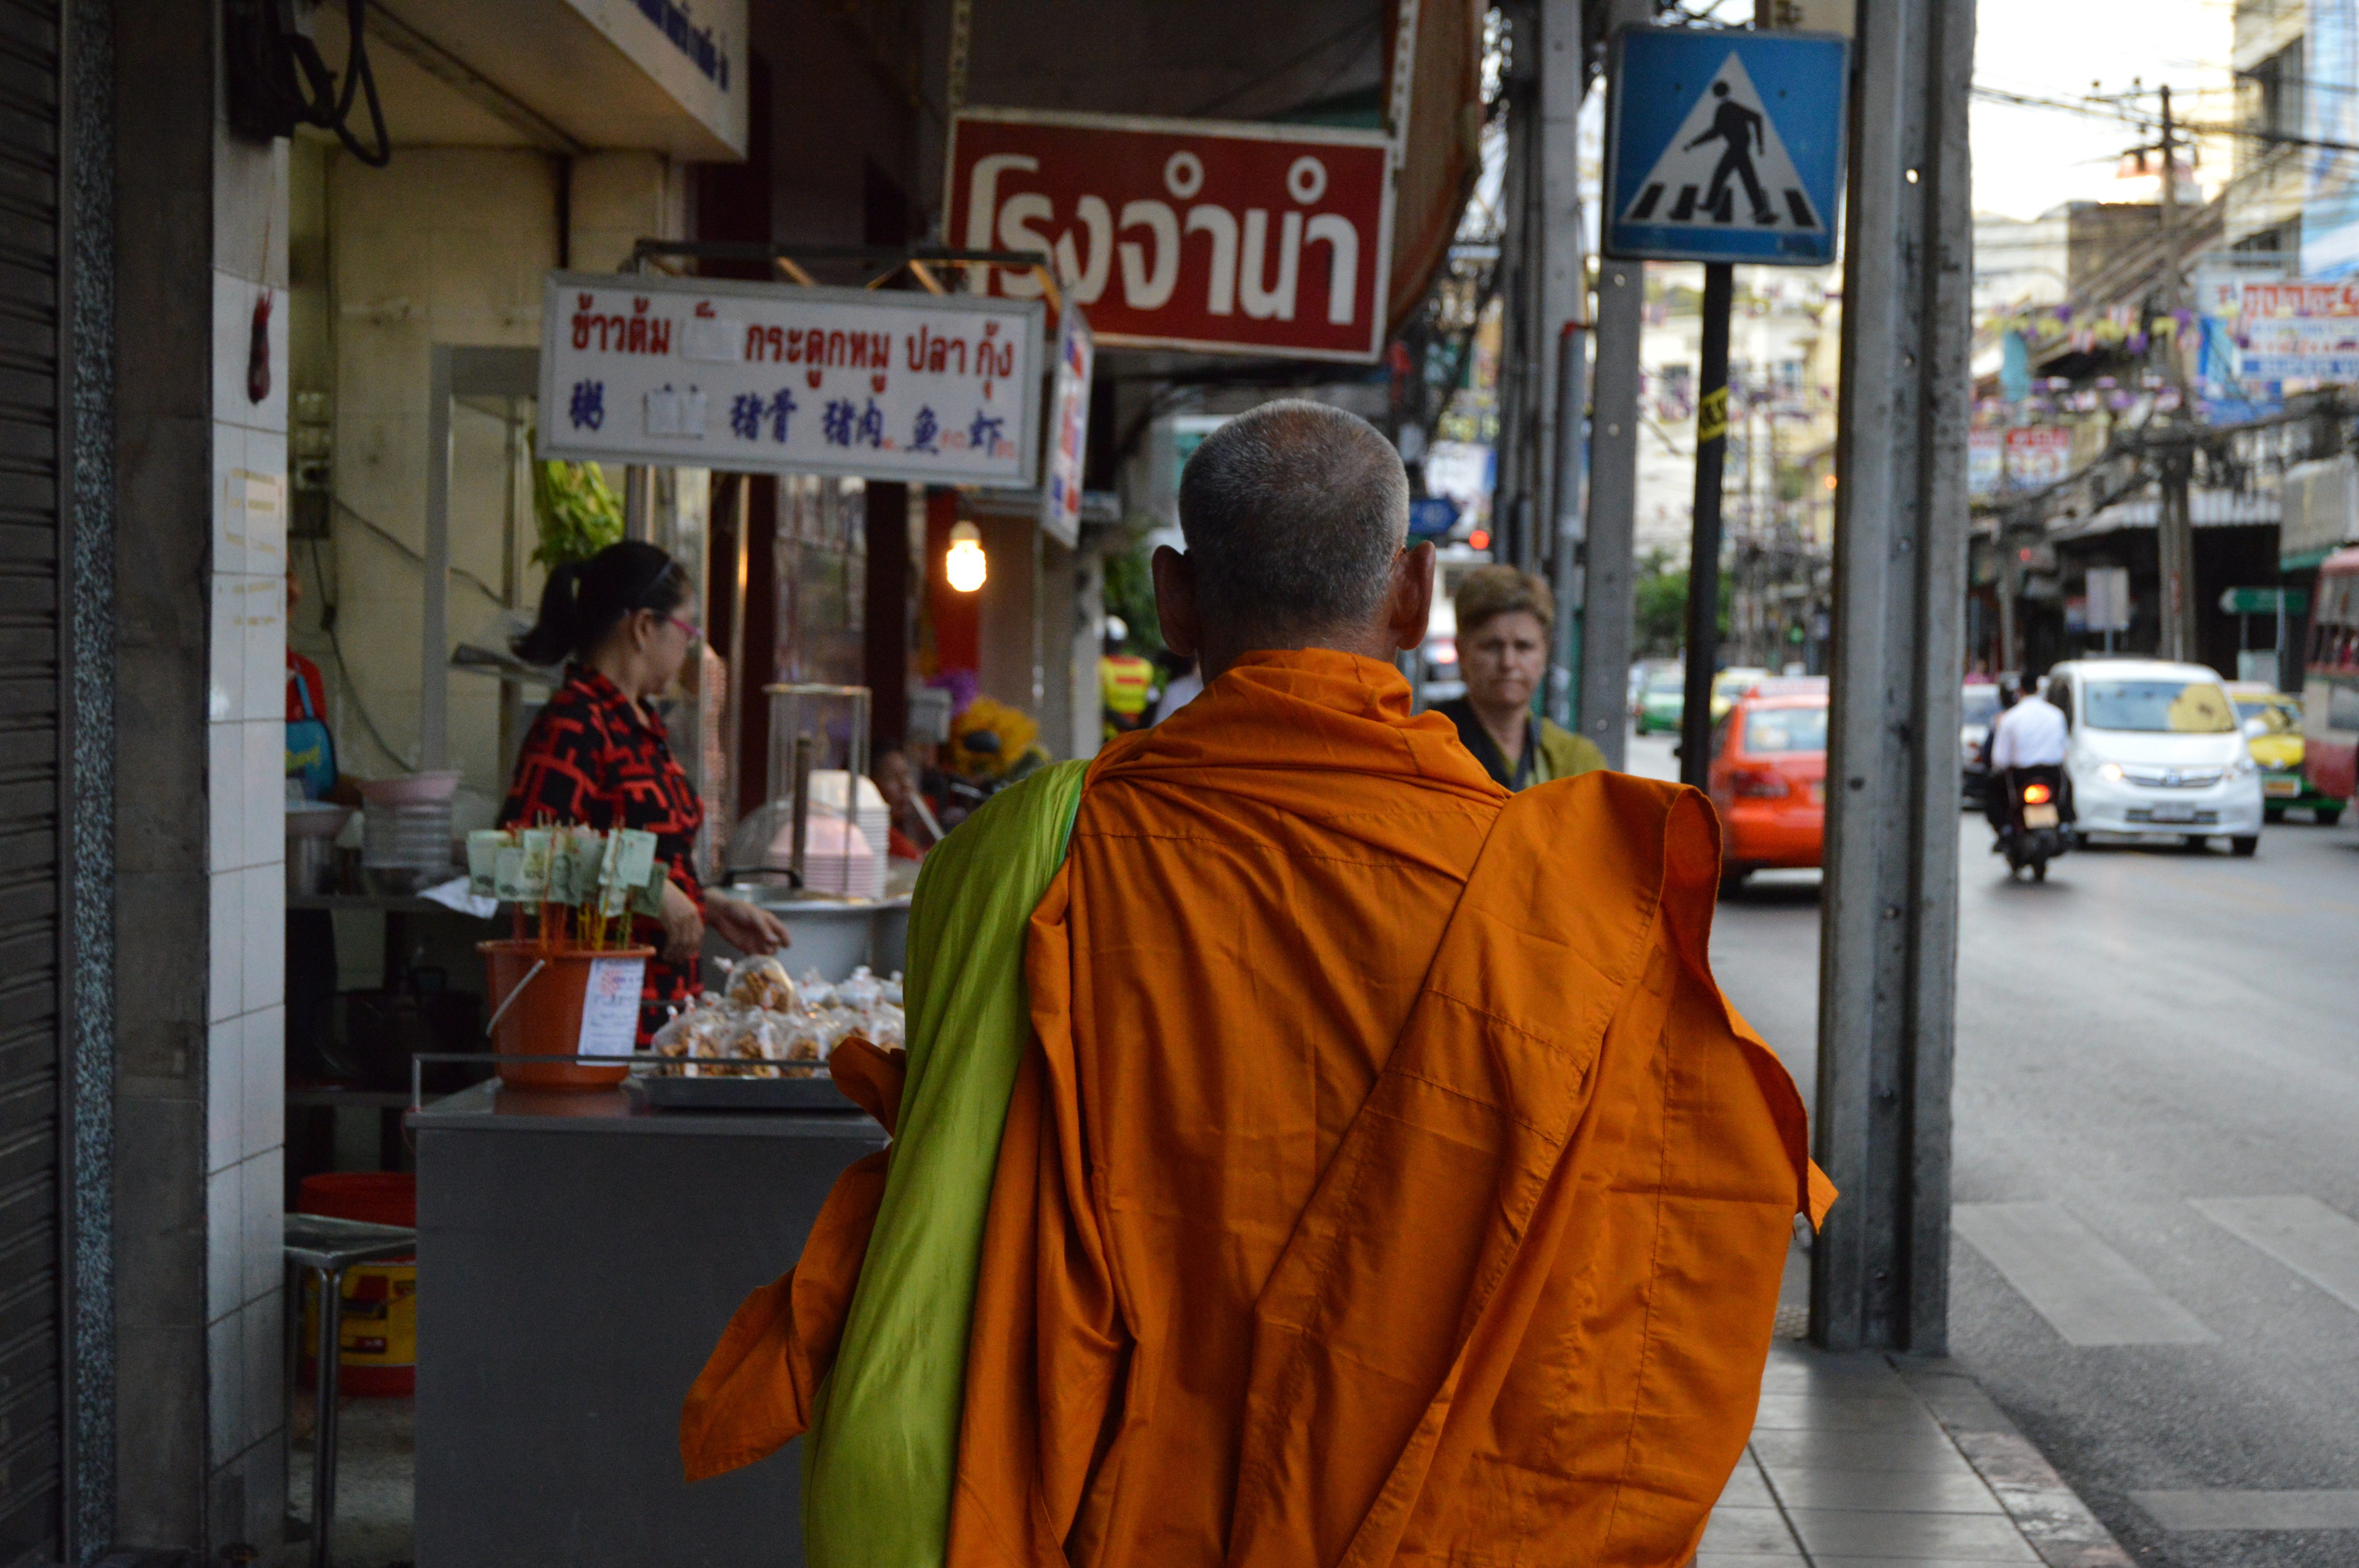 A monk walking down a street in Bangkok.